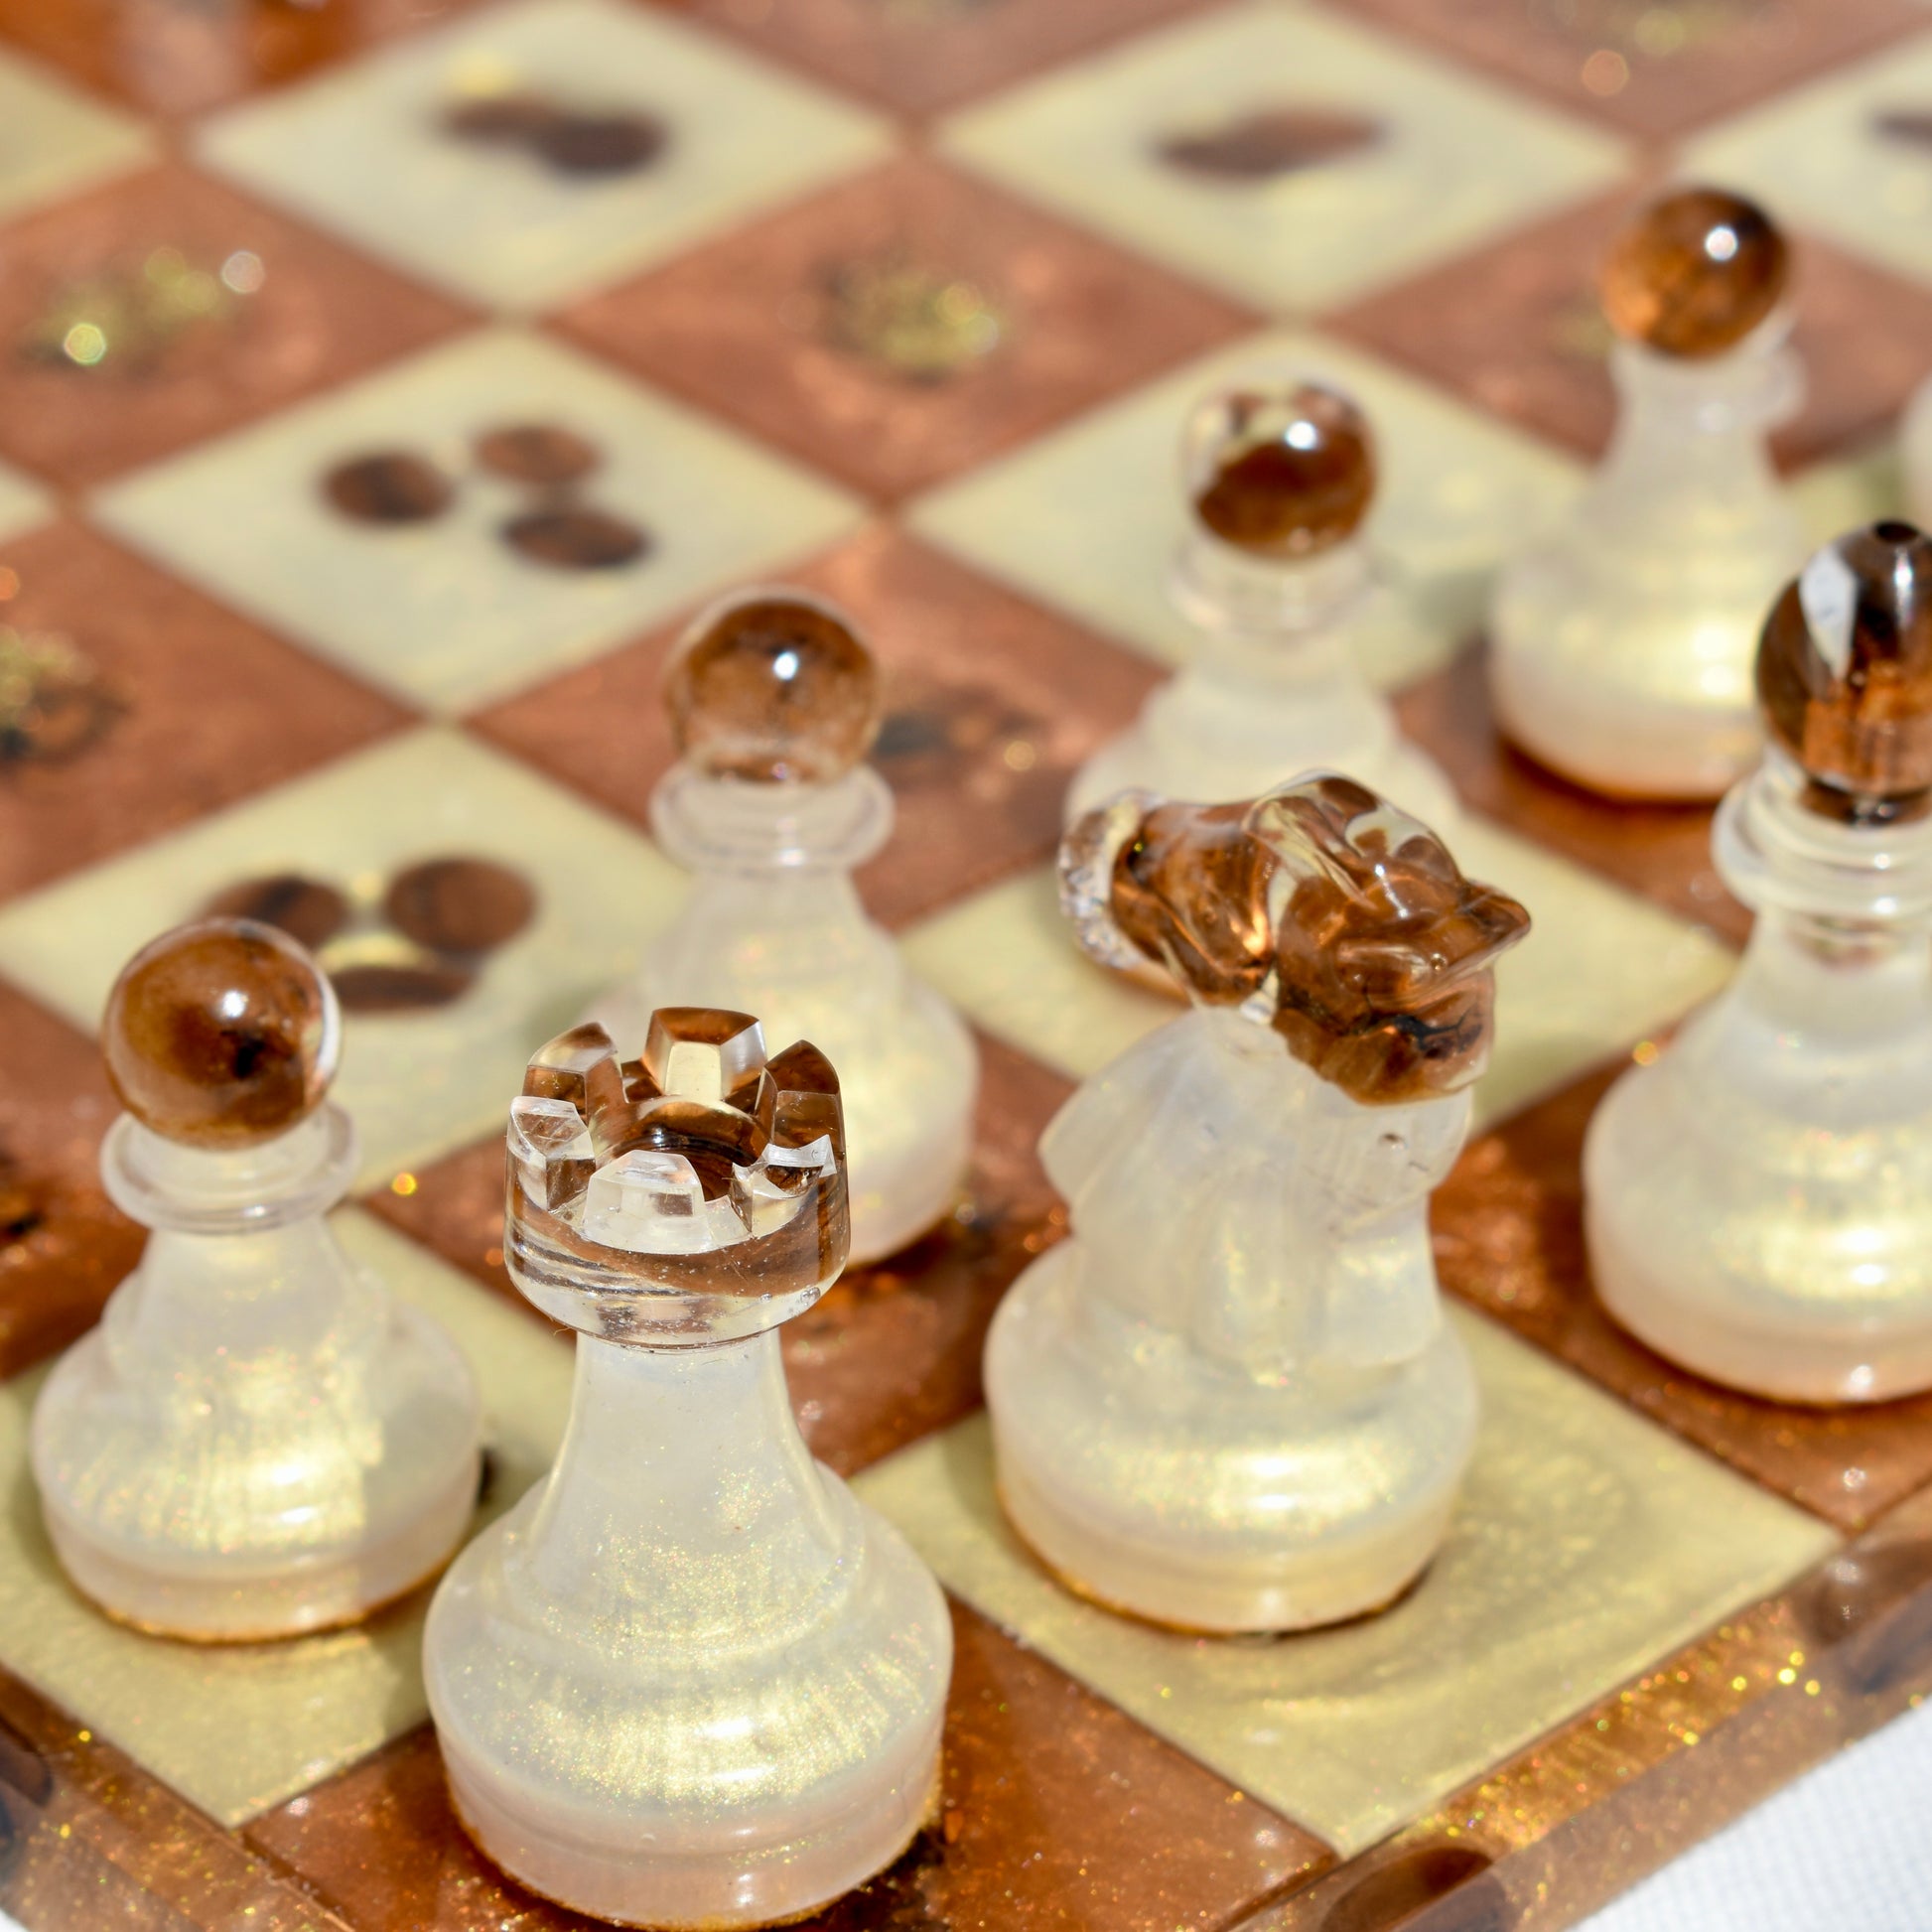 Premium College Colors Chess & Checkers Set • Sleek Custom Chess & Che –  Sparrow Art Vibes